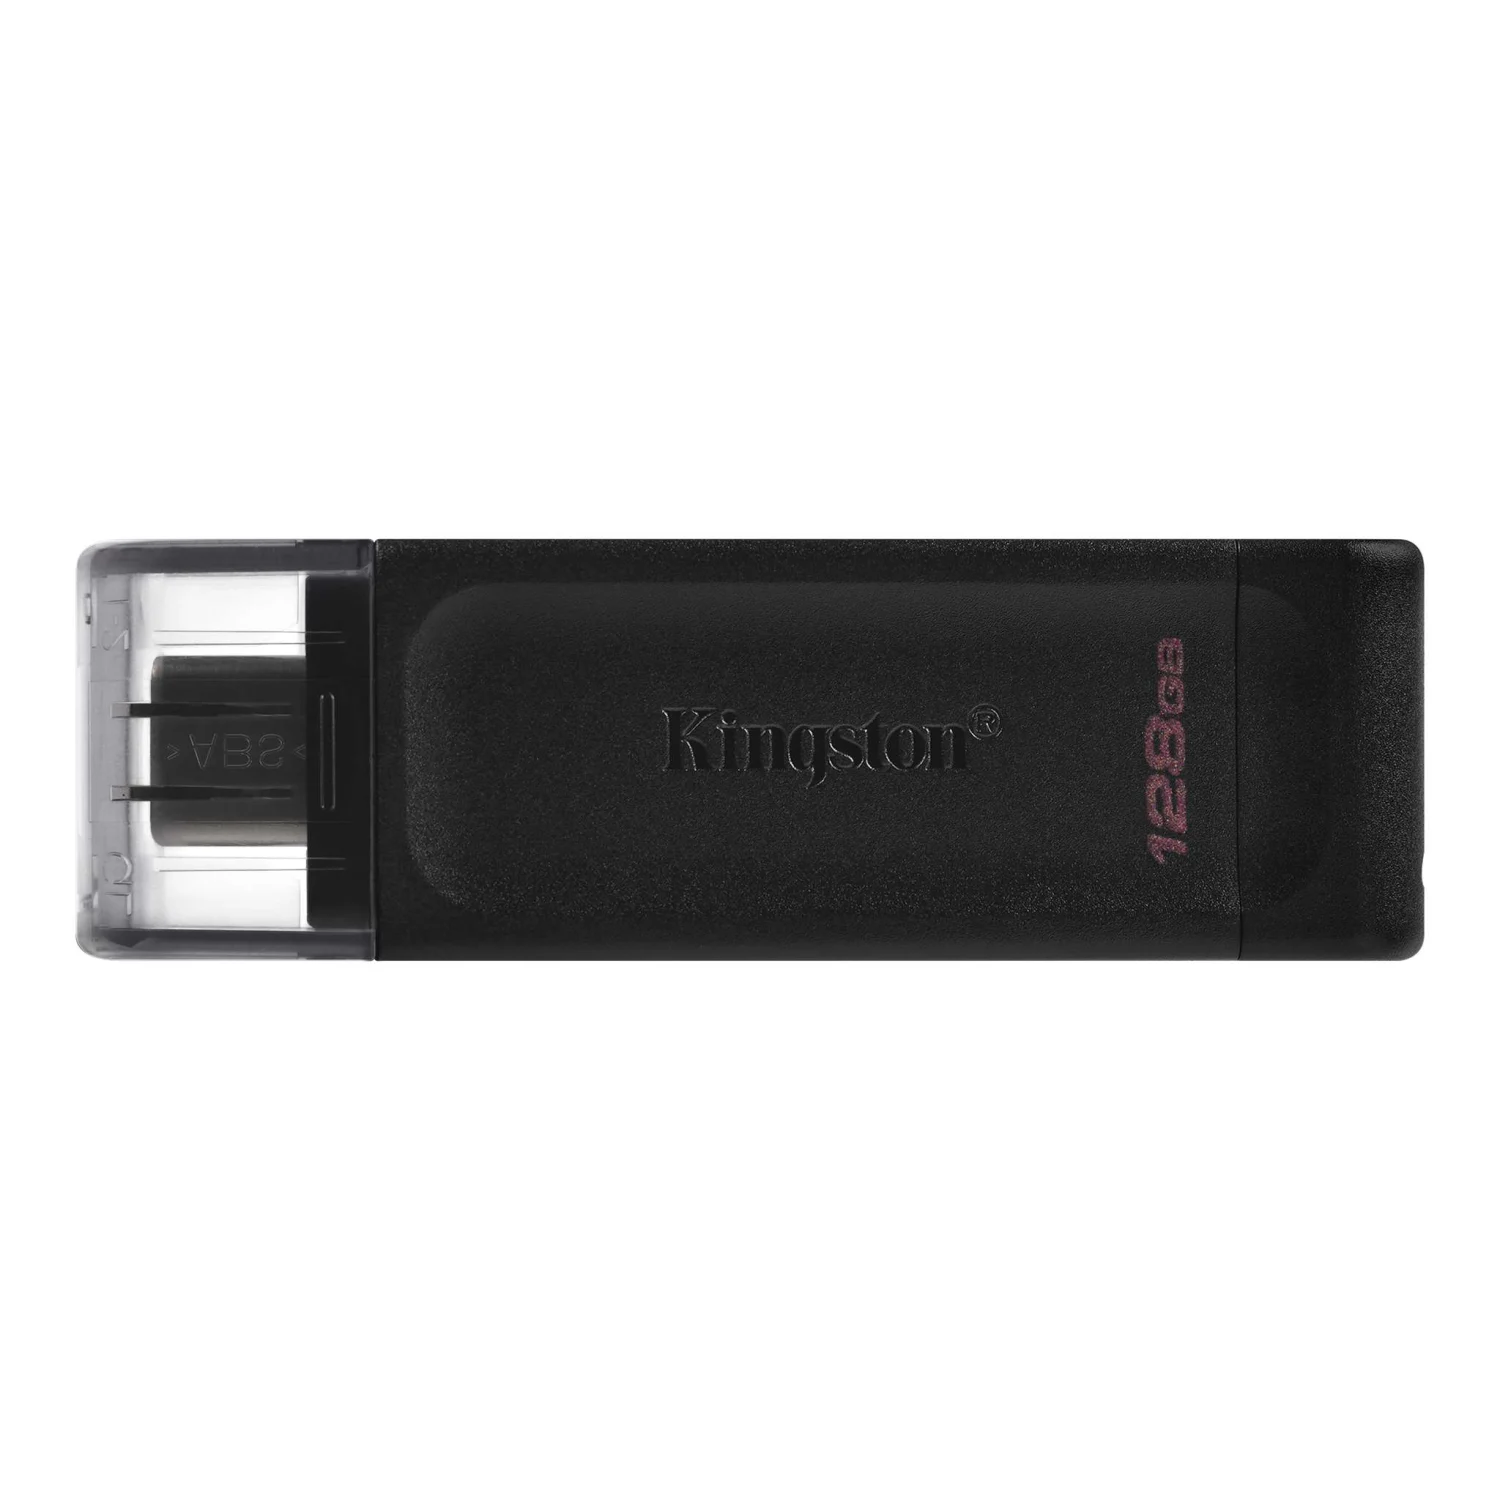 Pendrive Kingston DataTraveler DT70 128GB / USB-C / Tipo-C